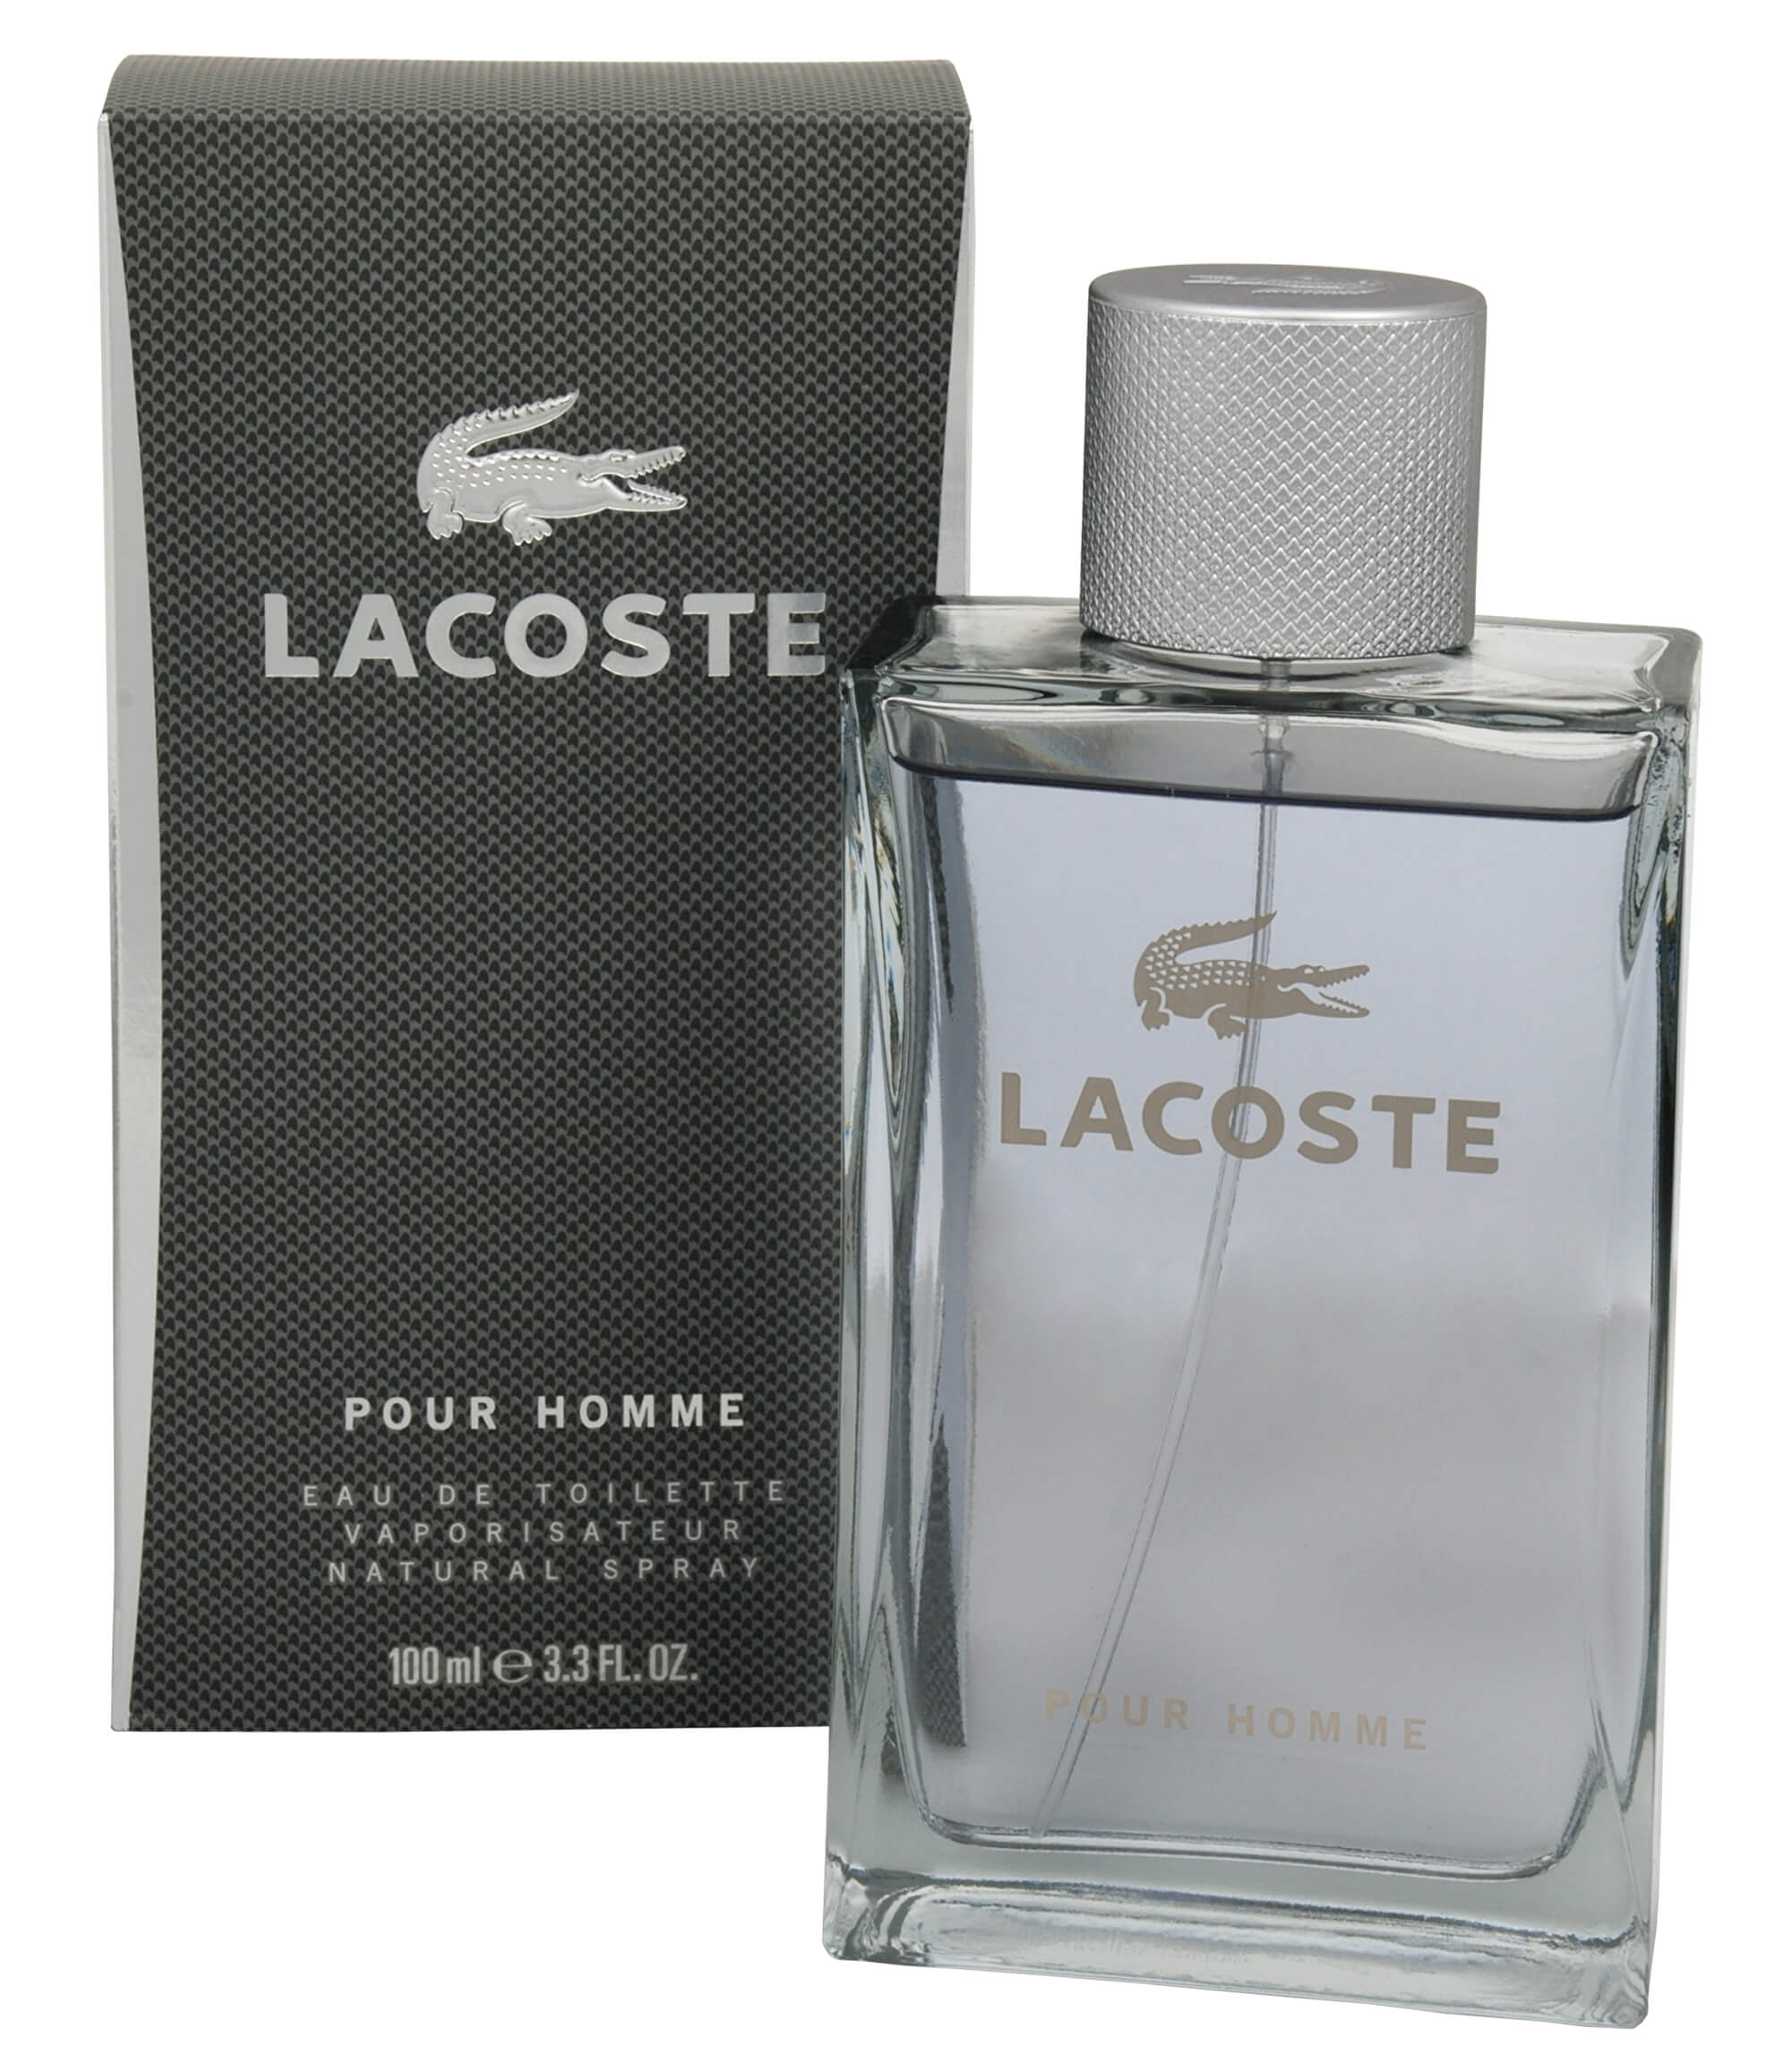 Pour homme для мужчин. Lacoste Lacoste pour homme 100 мл. Лакост pour homme женские. Lacoste pour homme EDT 50 ml. Мужская туалетная вода Lacoste 2010г.